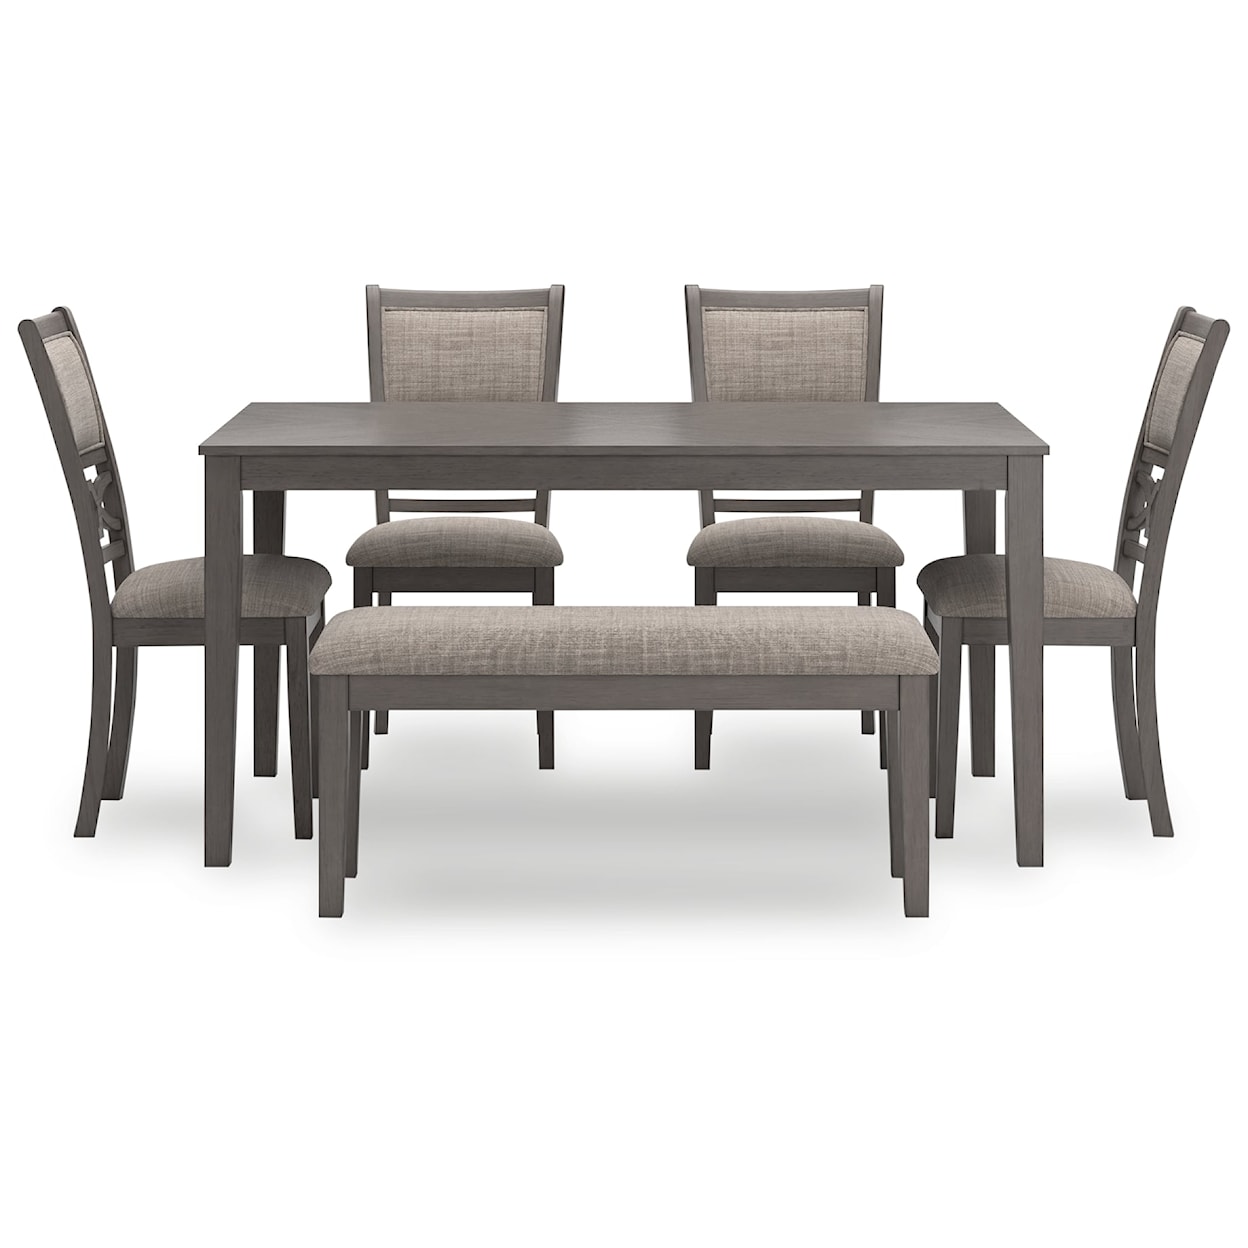 Ashley Furniture Signature Design Wrenning Dining Room Table Set (Set of 6)